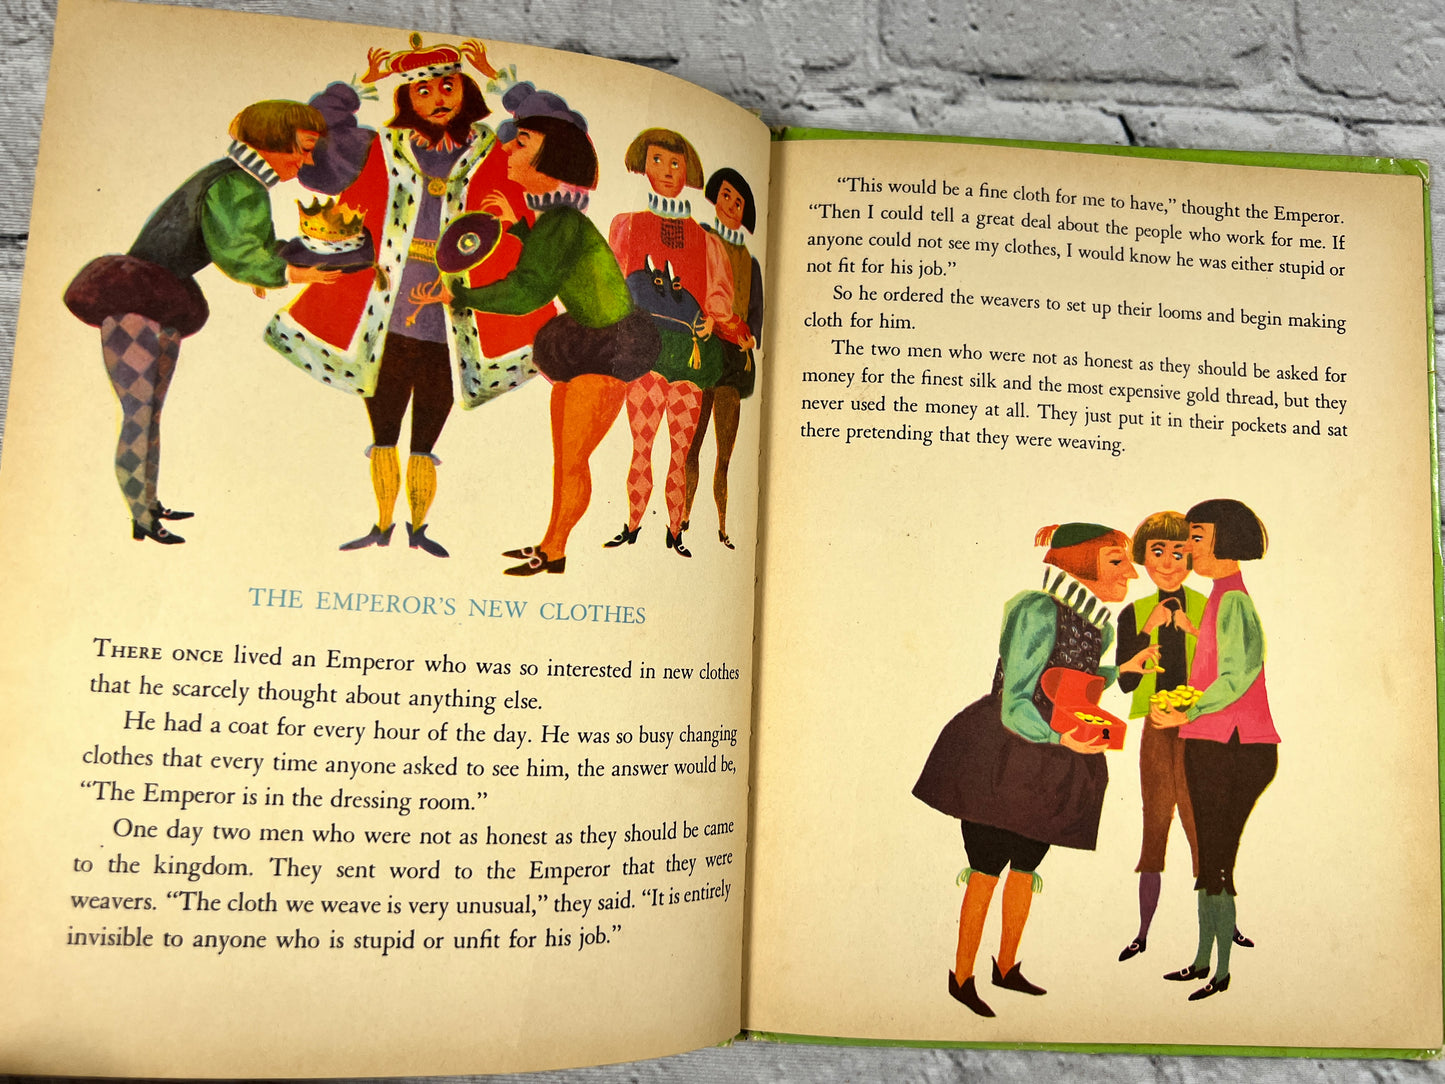 Hans Christian Andersen's Fairy Tales [Wonder Books · 1952 · 599]